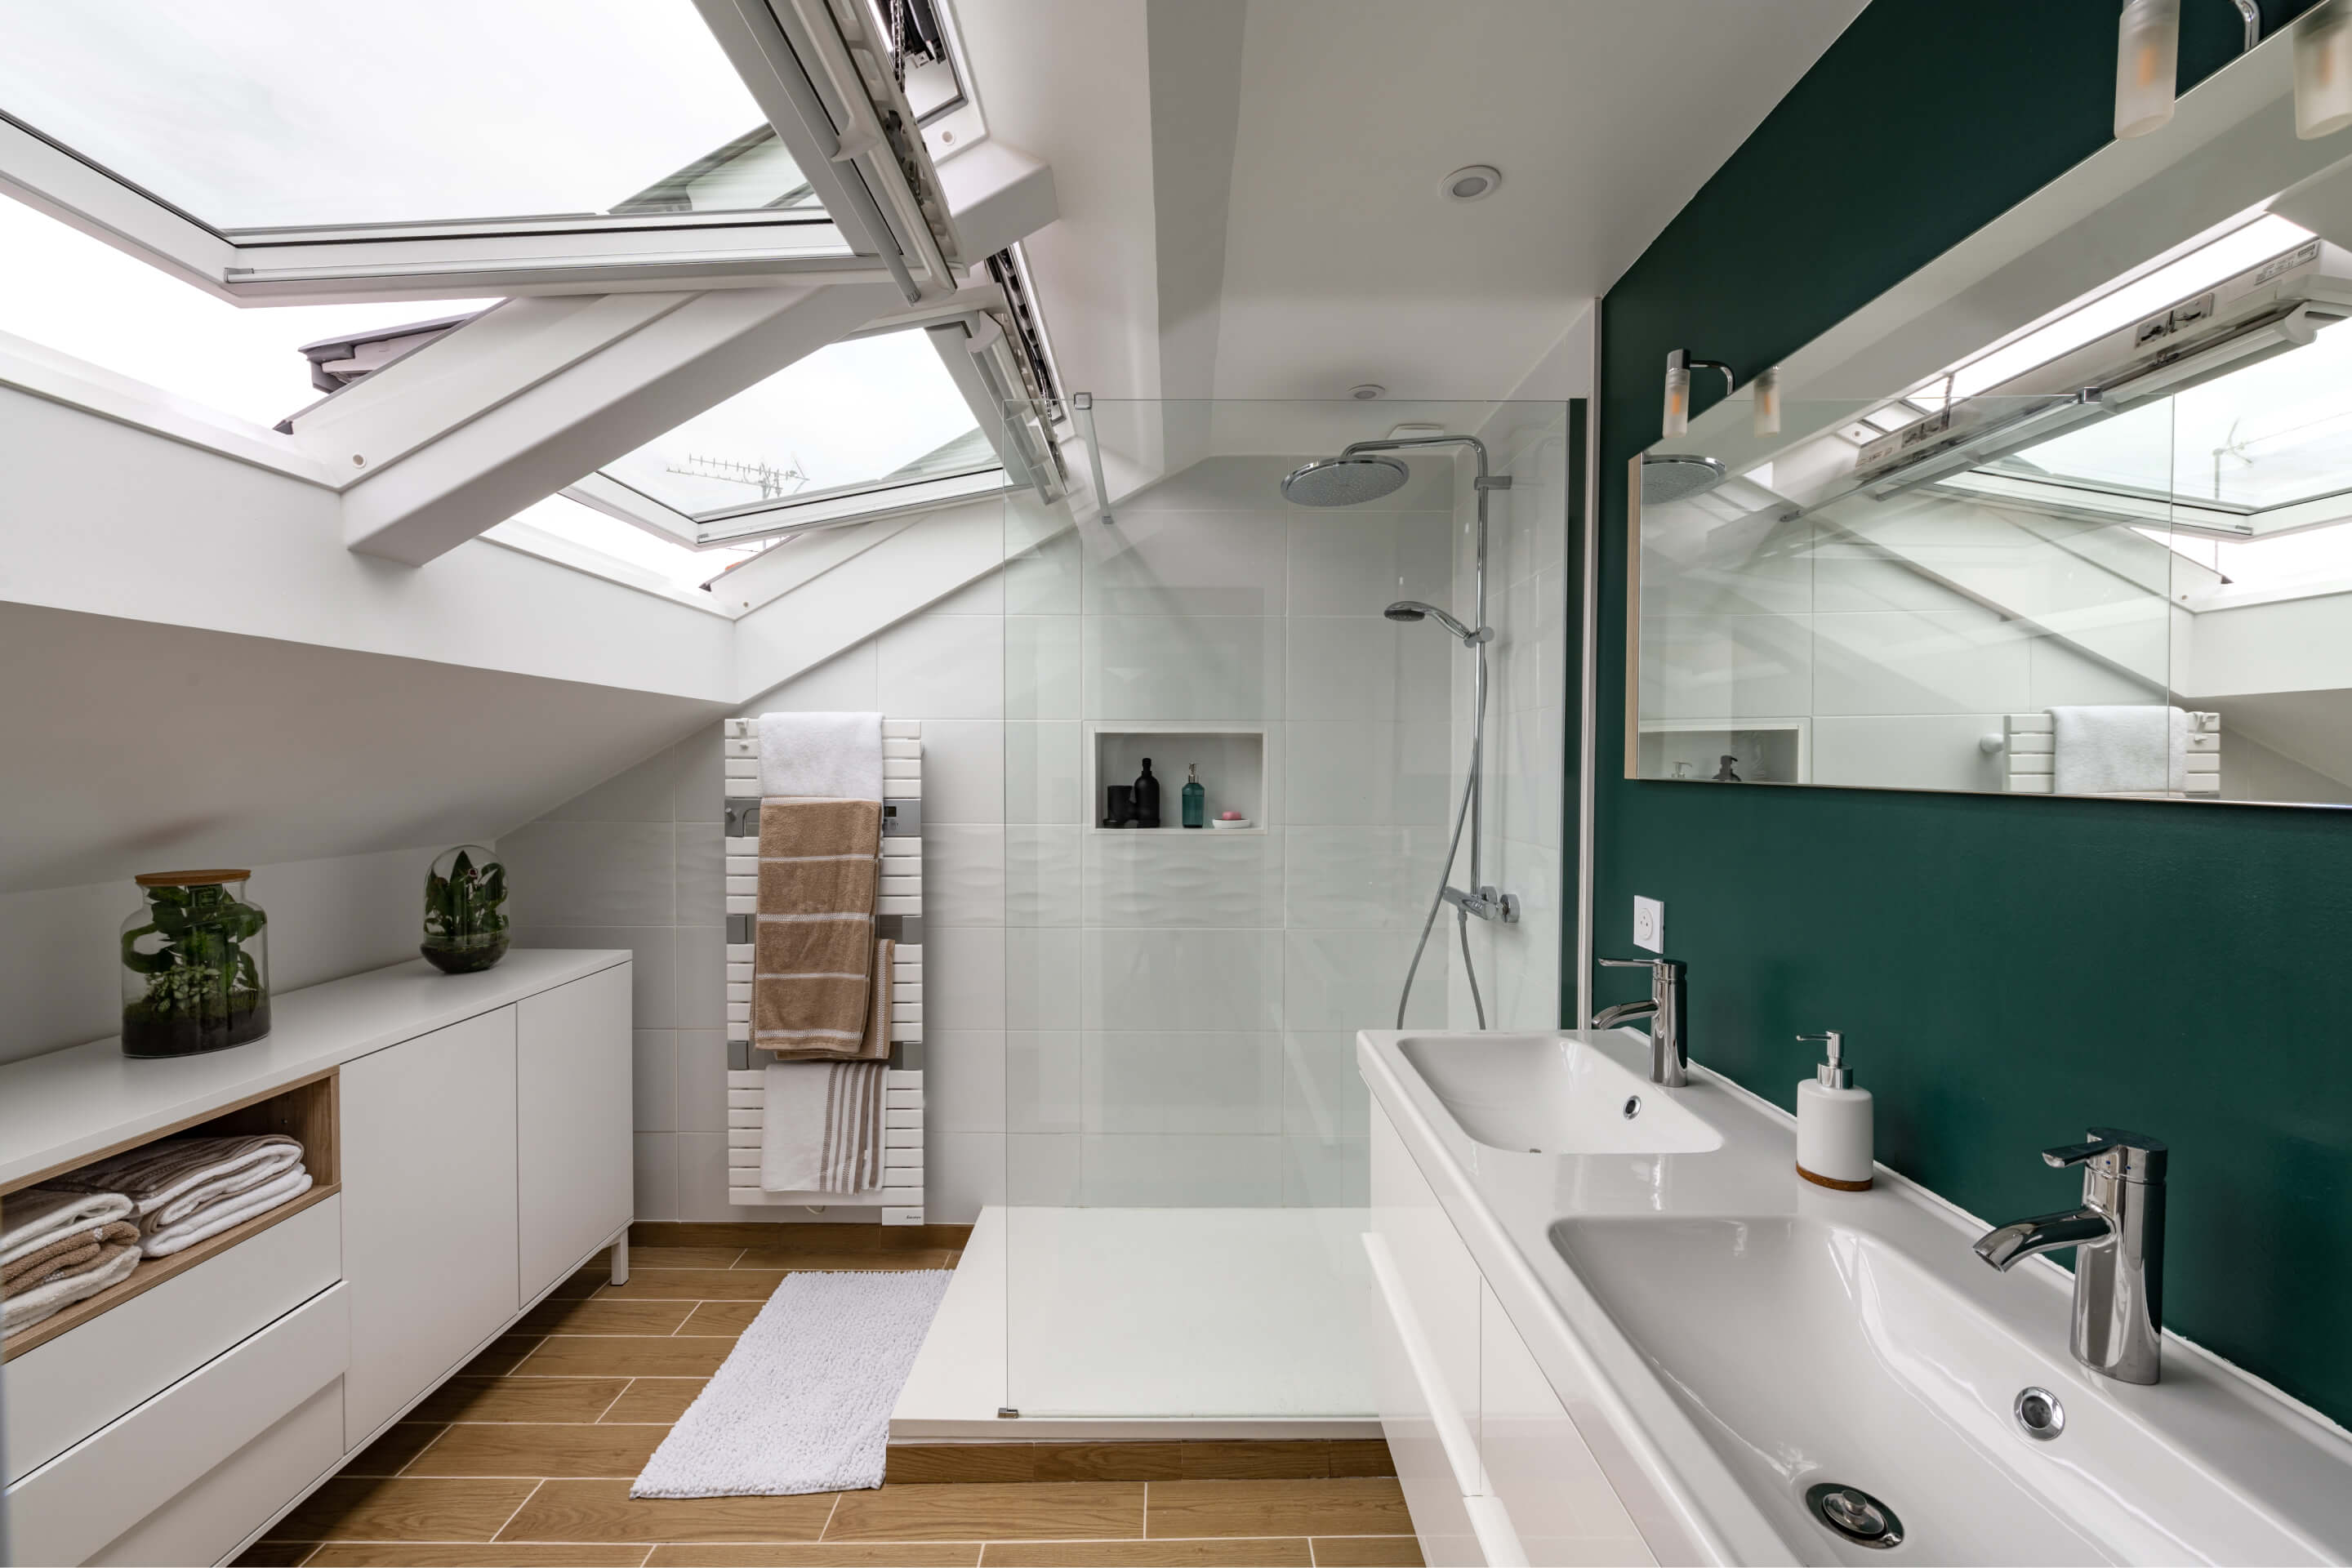 Bathroom with roof window